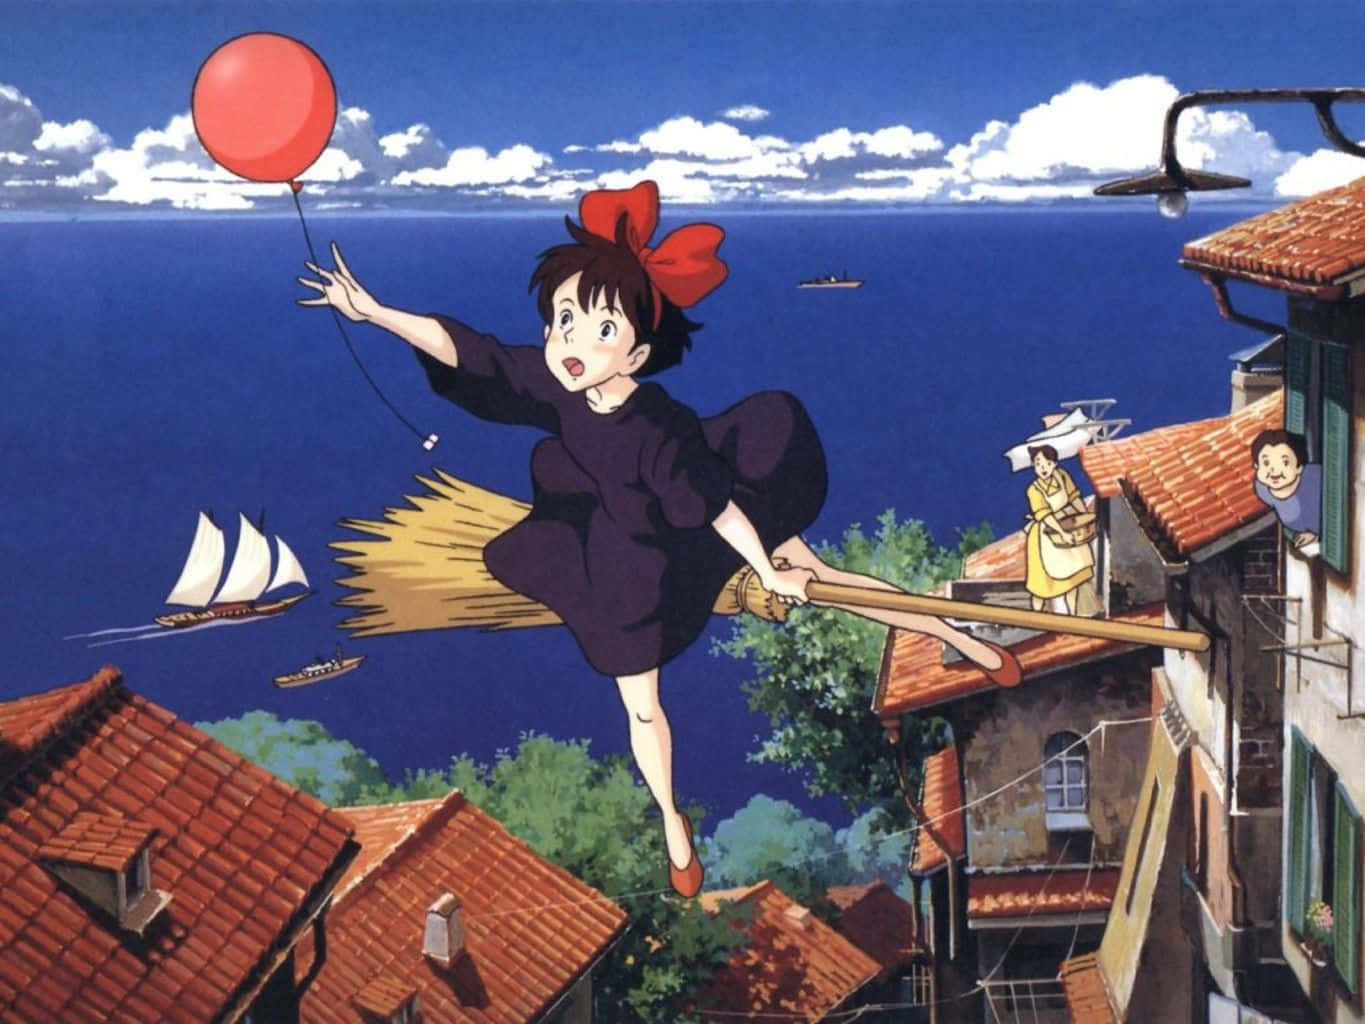 Kiki flying with Jiji on her broomstick in Kiki's Delivery Service Wallpaper